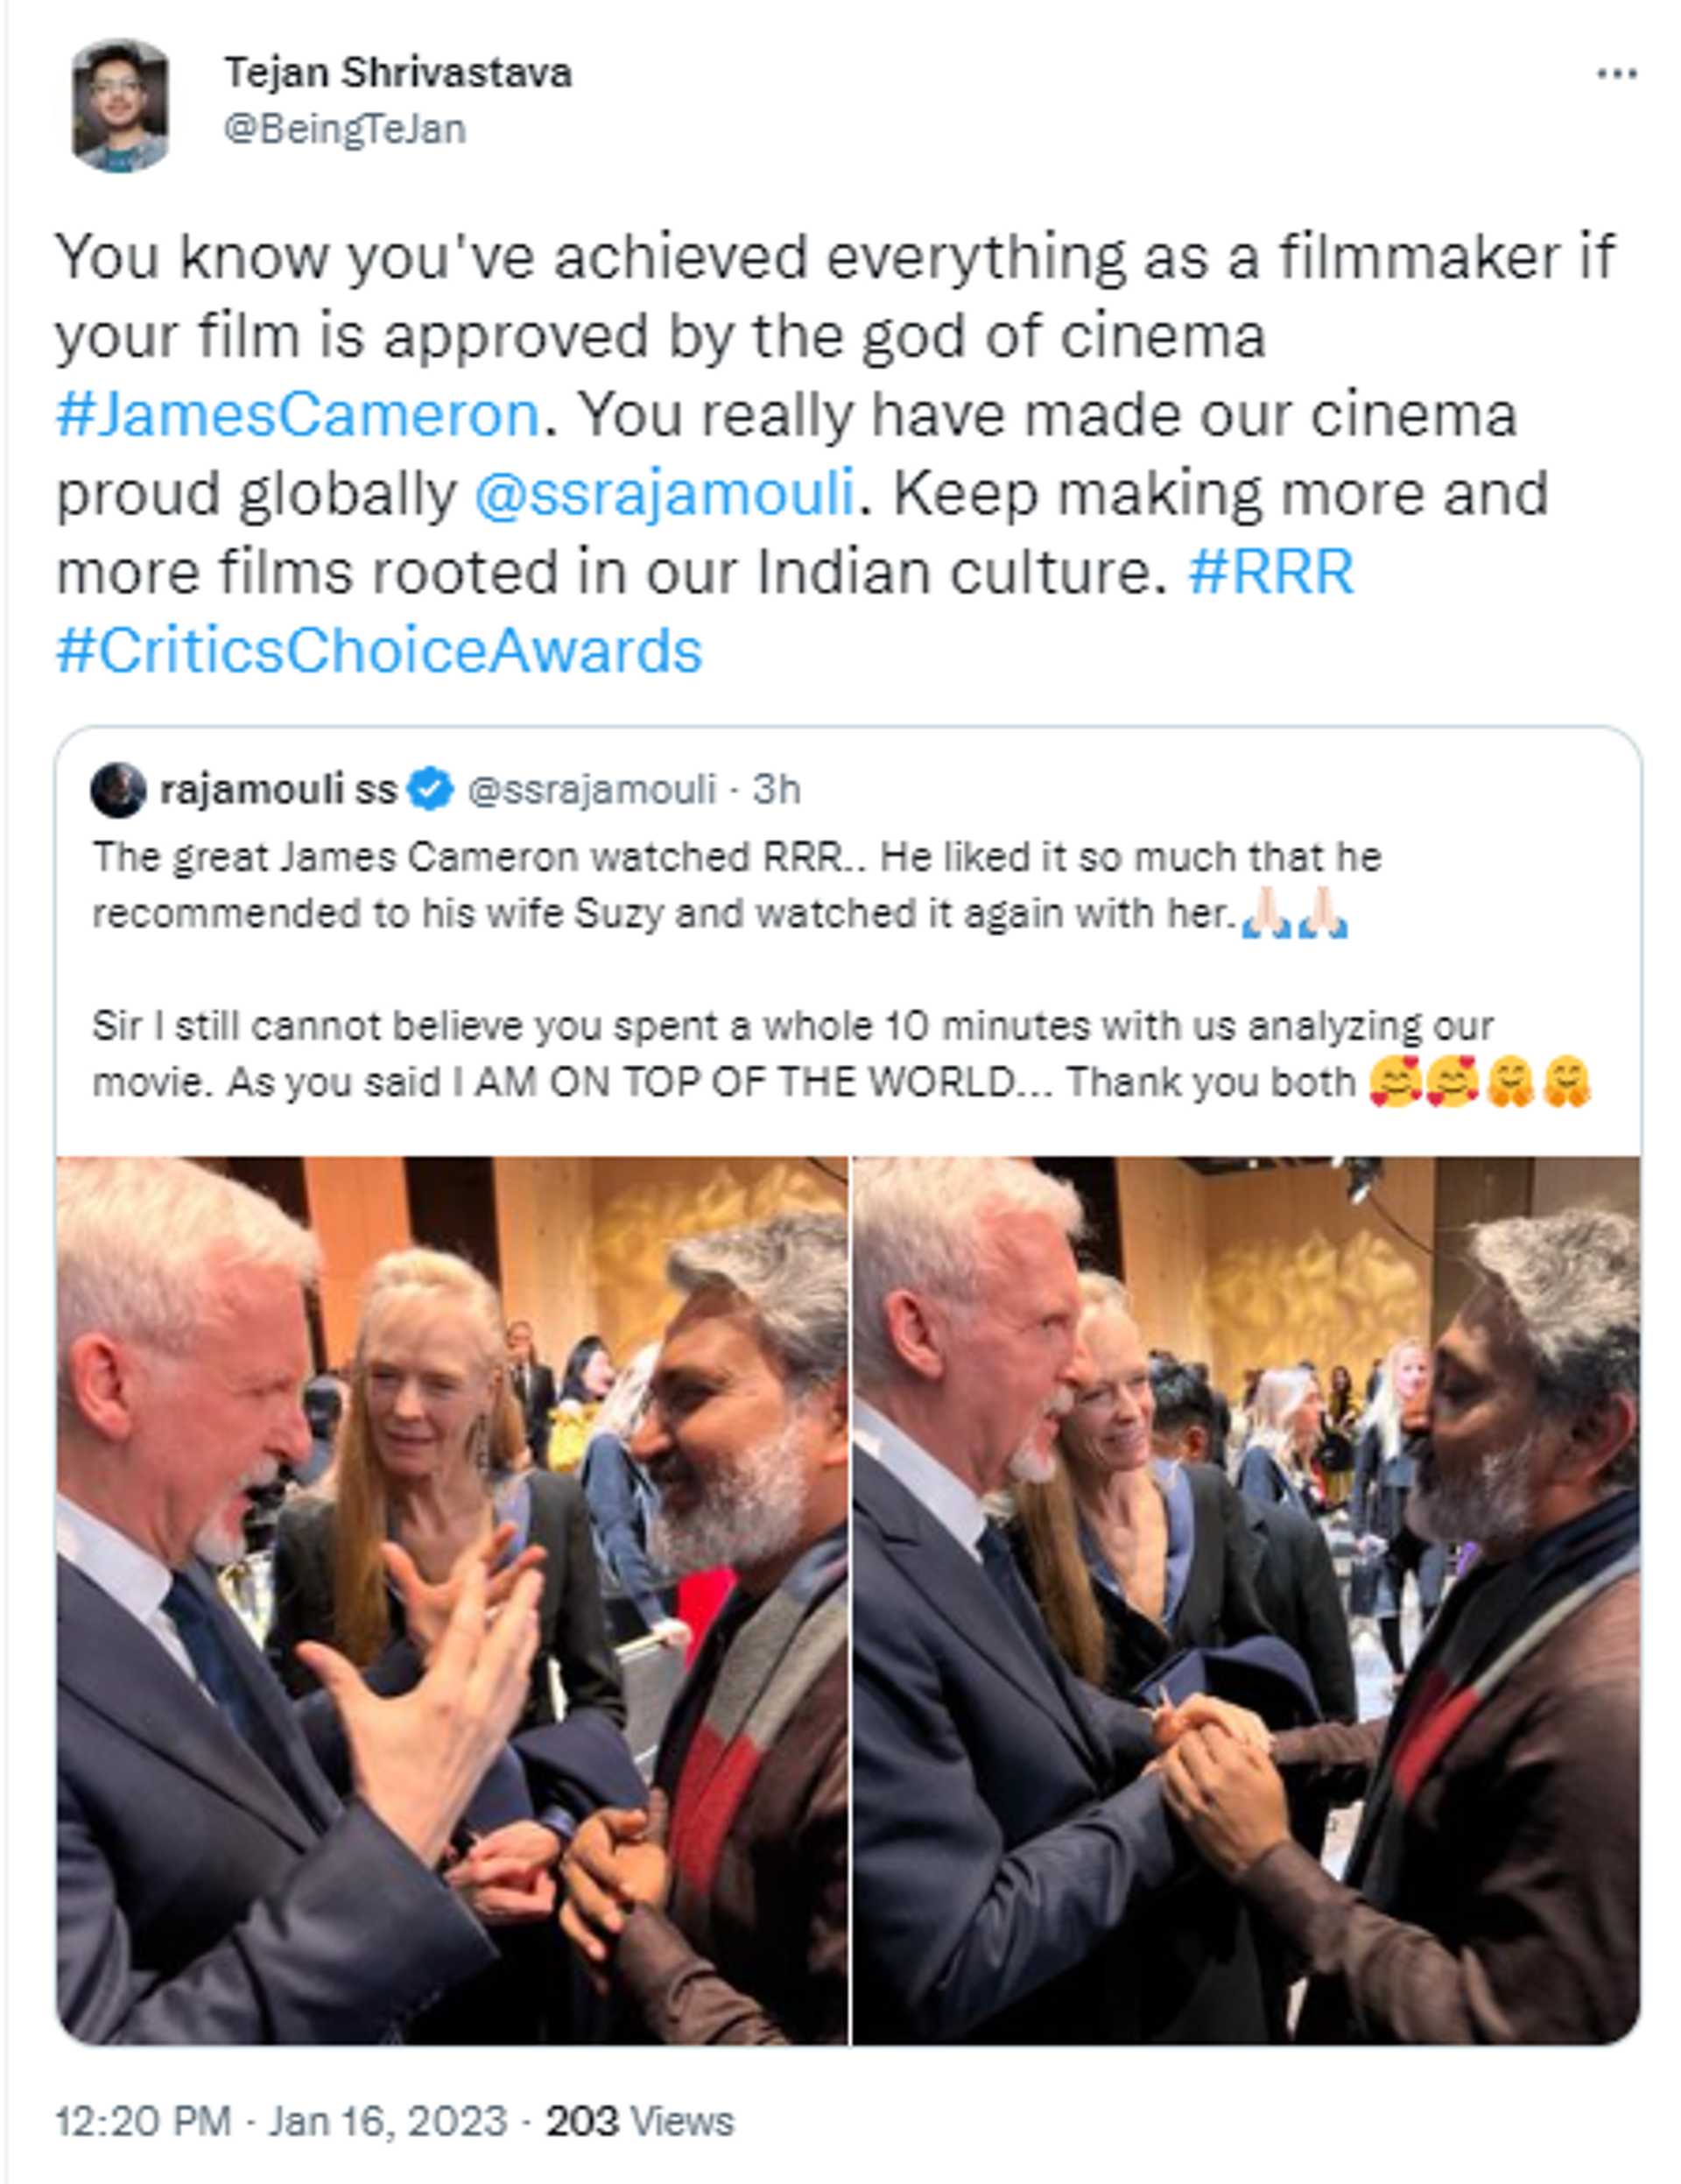 Veteran Indian filmmaker S.S. Rajamouli interacts with filmmaker James Cameron after winning two awards at Critics Choice Awards - Sputnik India, 1920, 16.01.2023